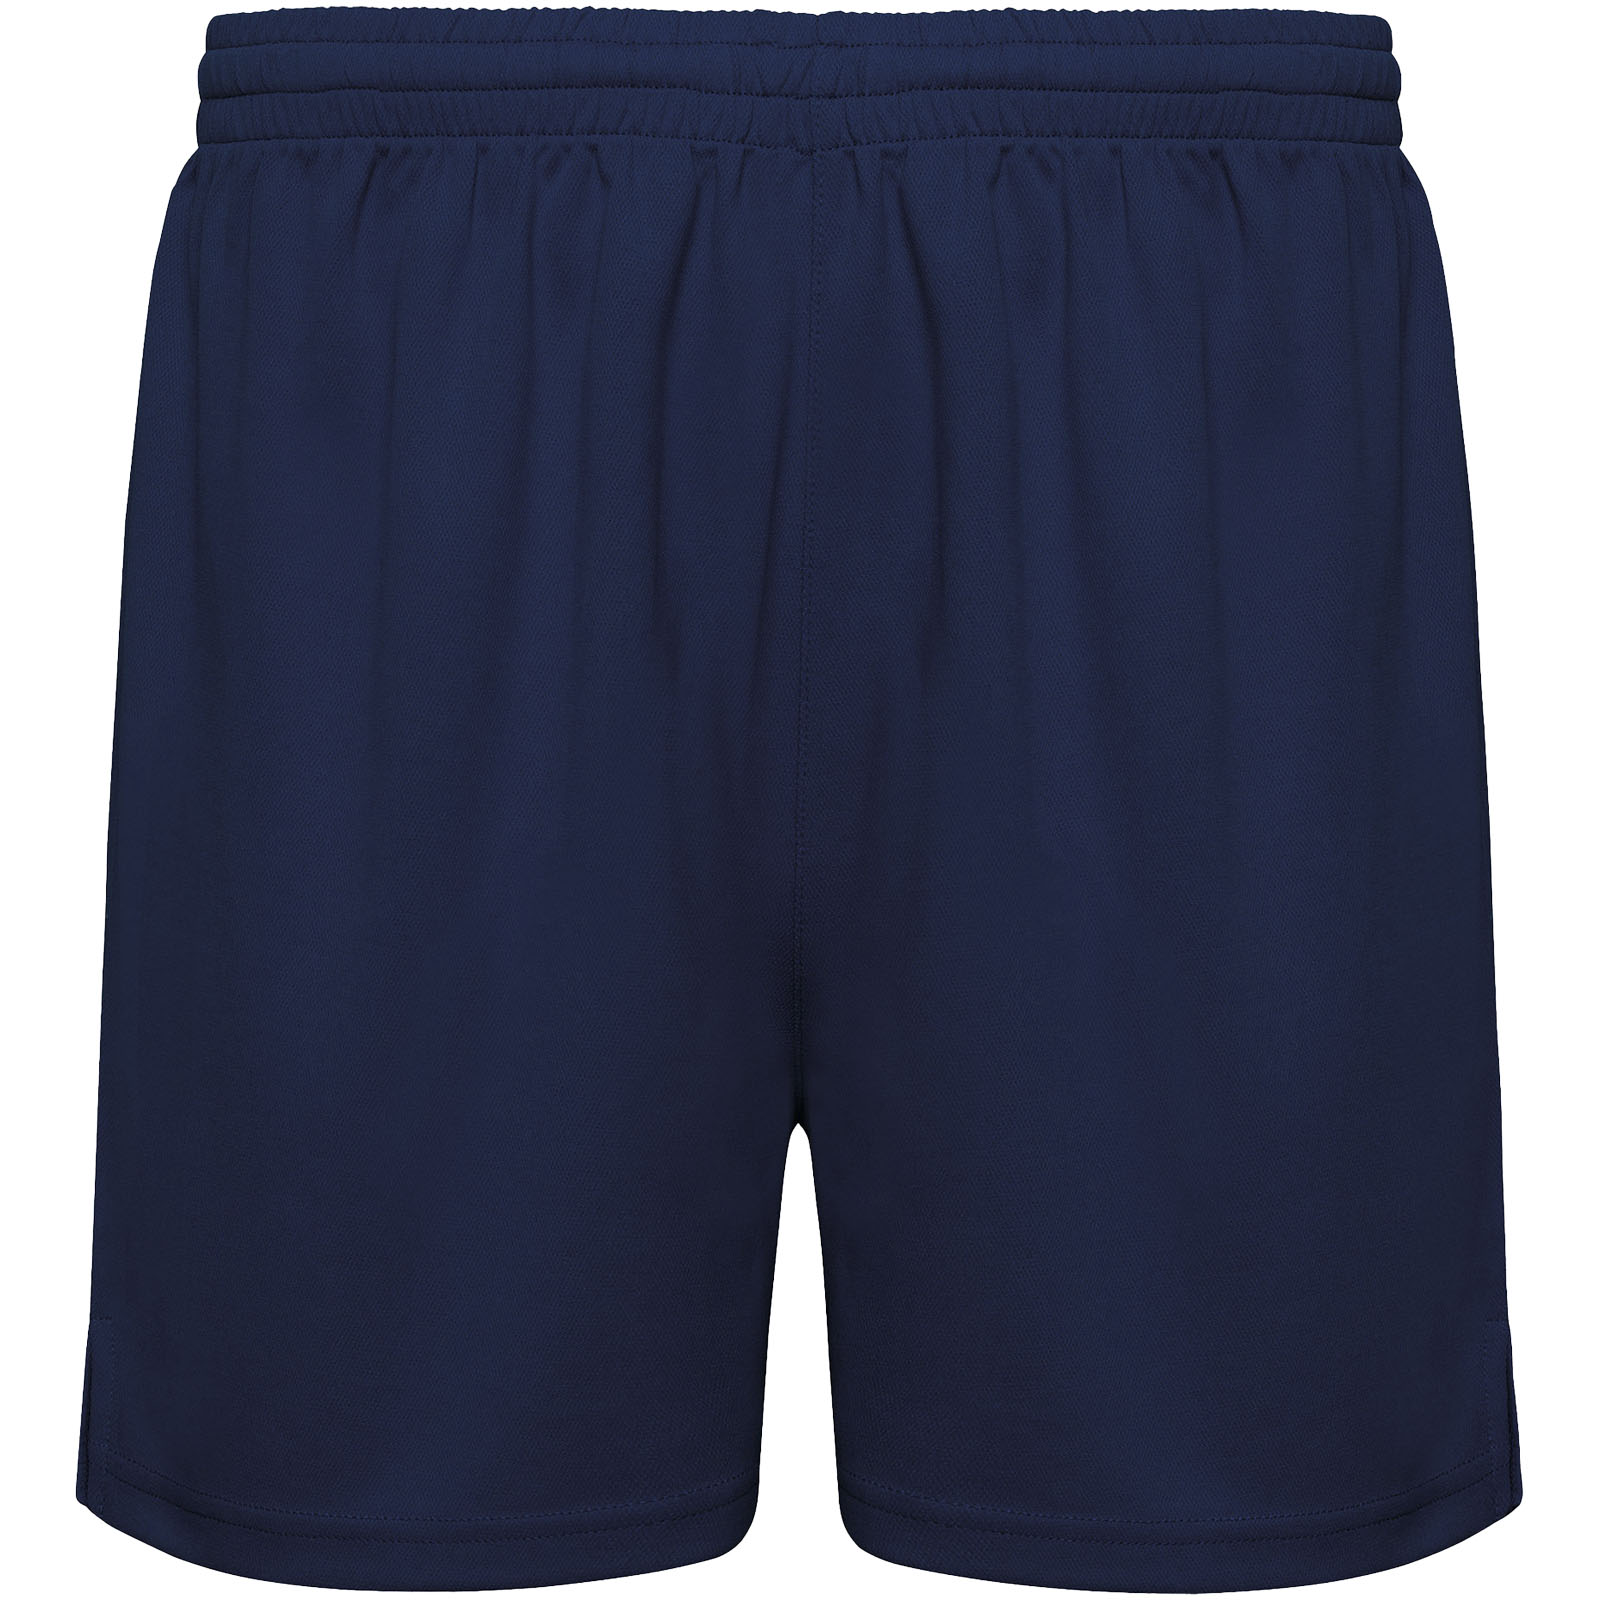 Clothing - Player kids sports shorts